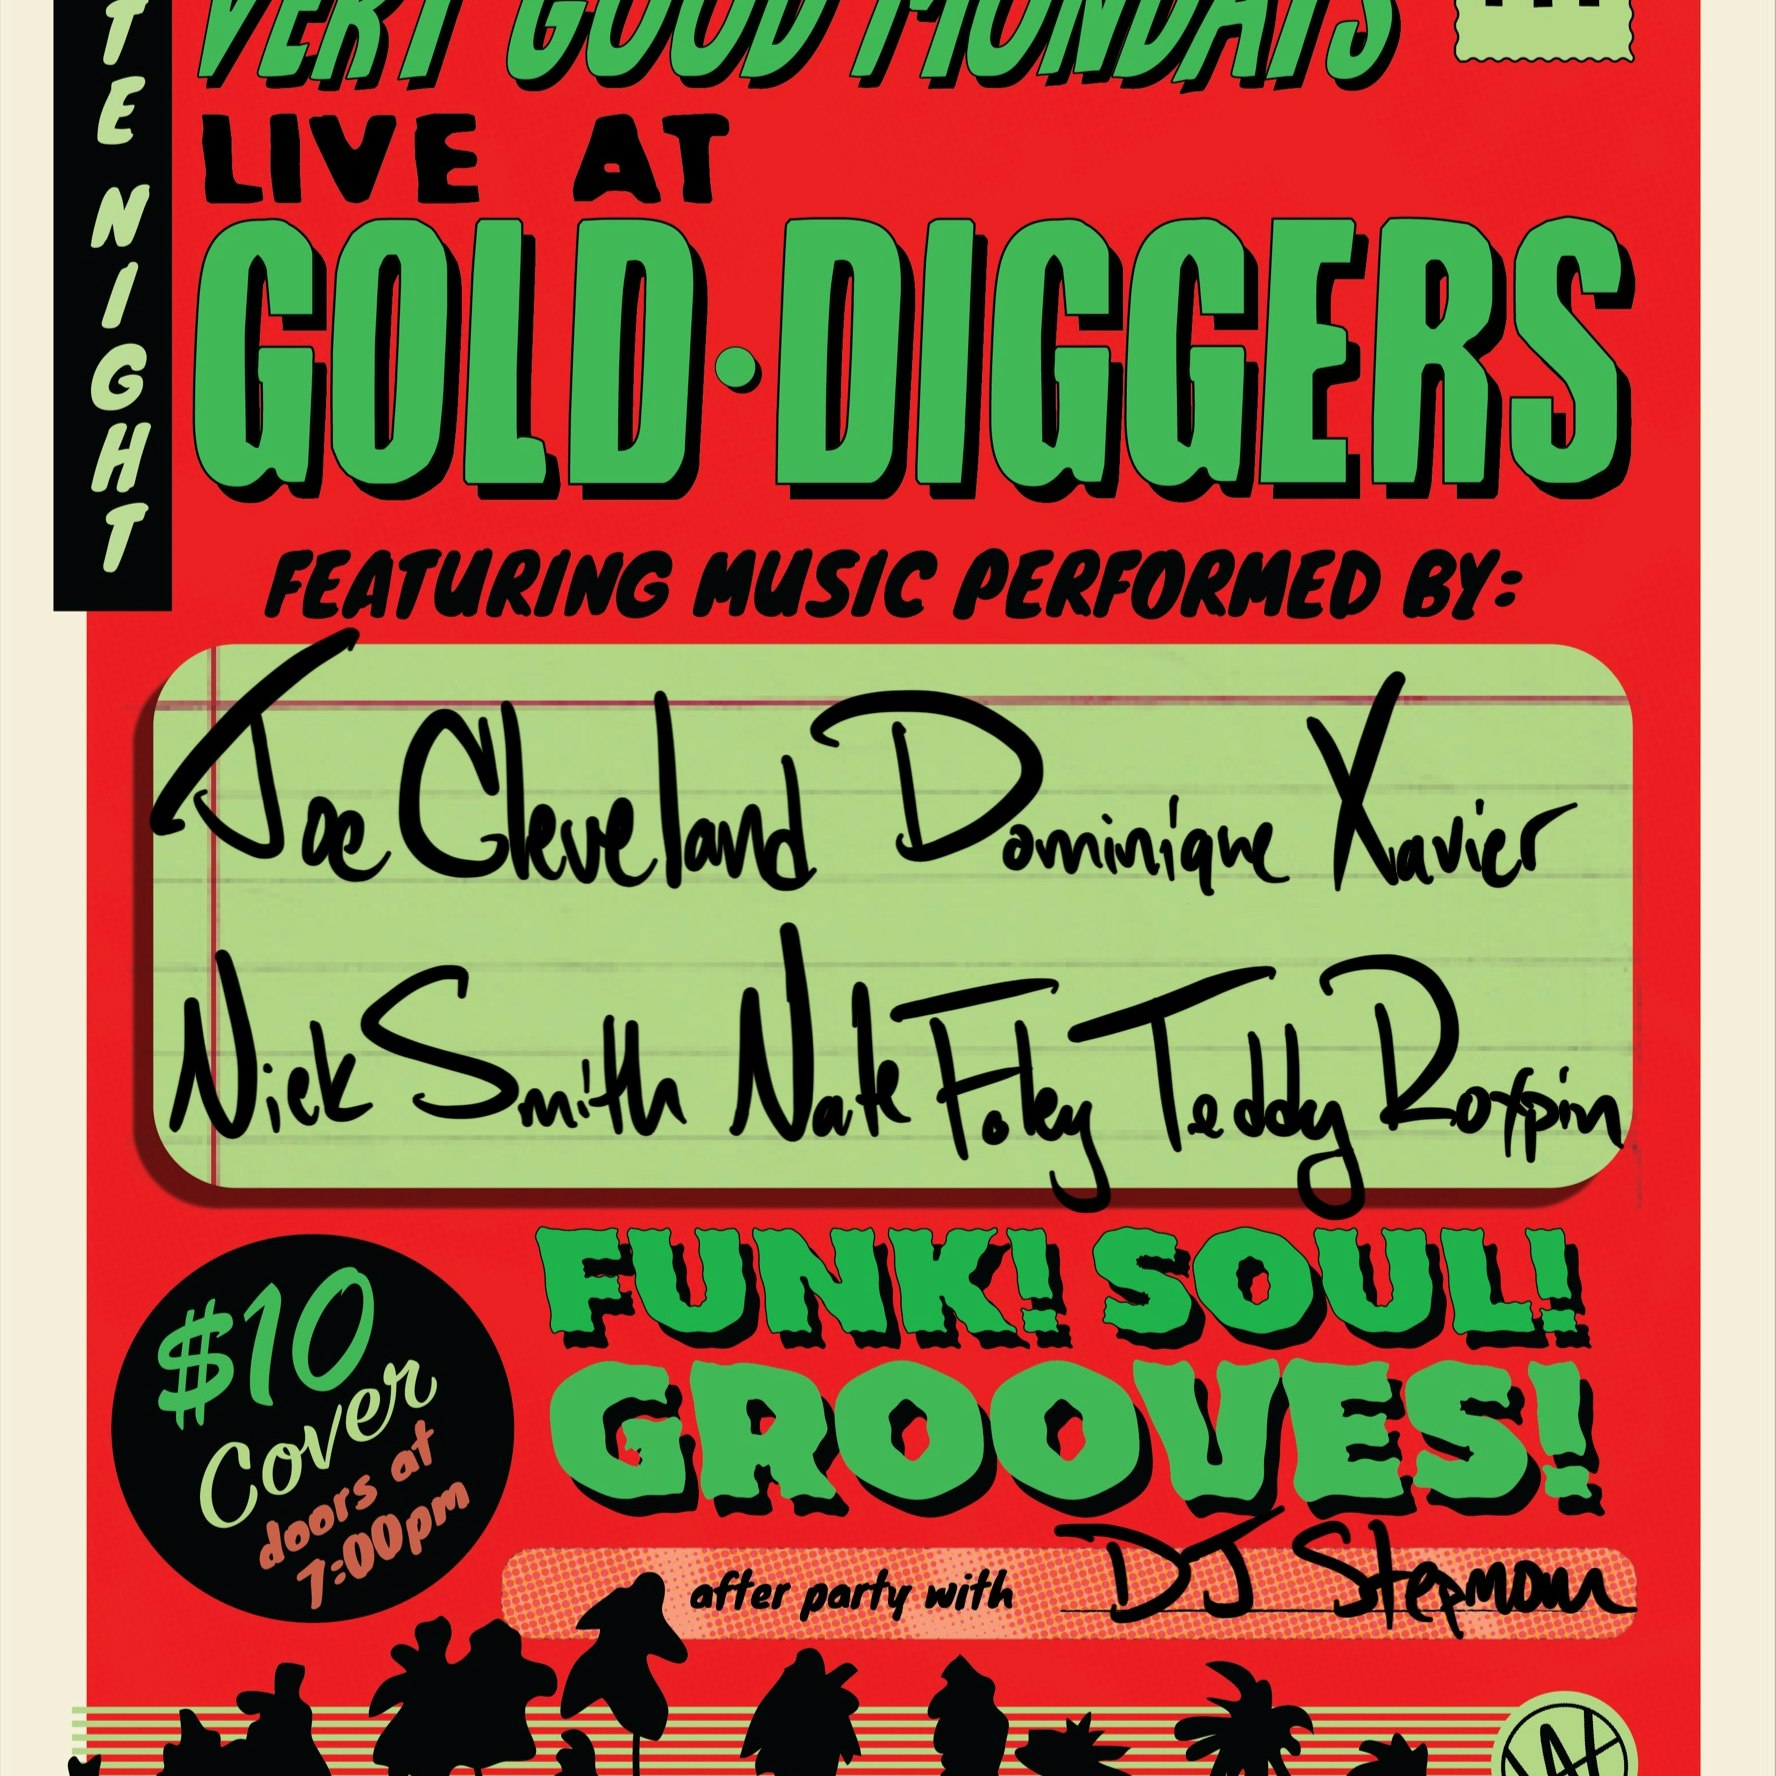 very good™ mondays Tickets, $11.03, 11 Dec @ Gold-Diggers, Los Angeles